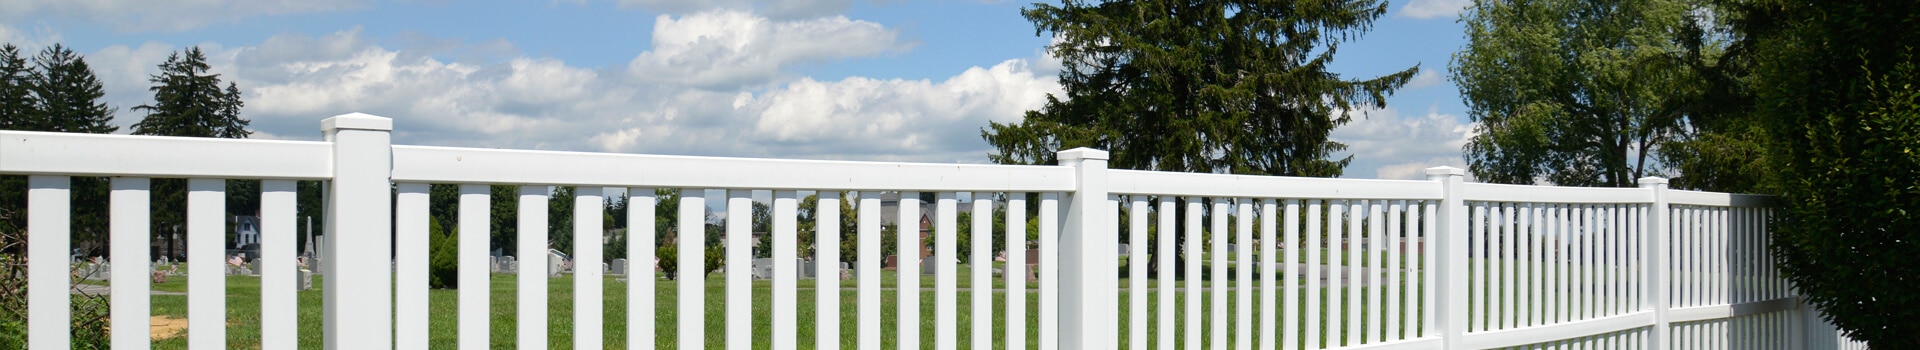 Using gas trimmer - Big Easy Fences